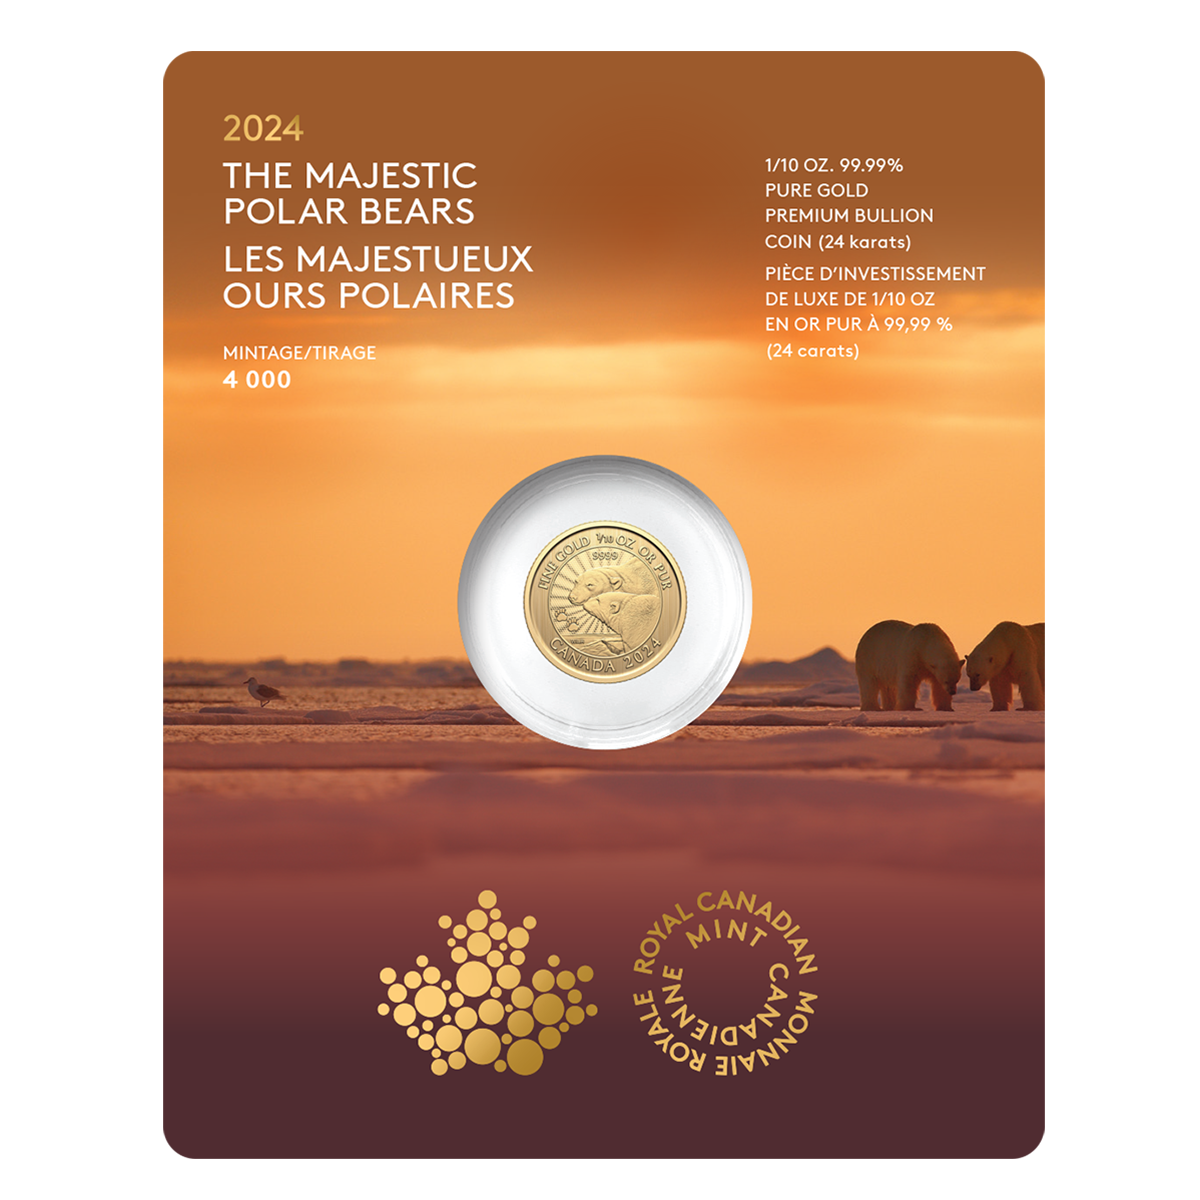 1/10 oz. 99.99% Pure Gold Coin: The Majestic Polar Bears (Premium Bullion)